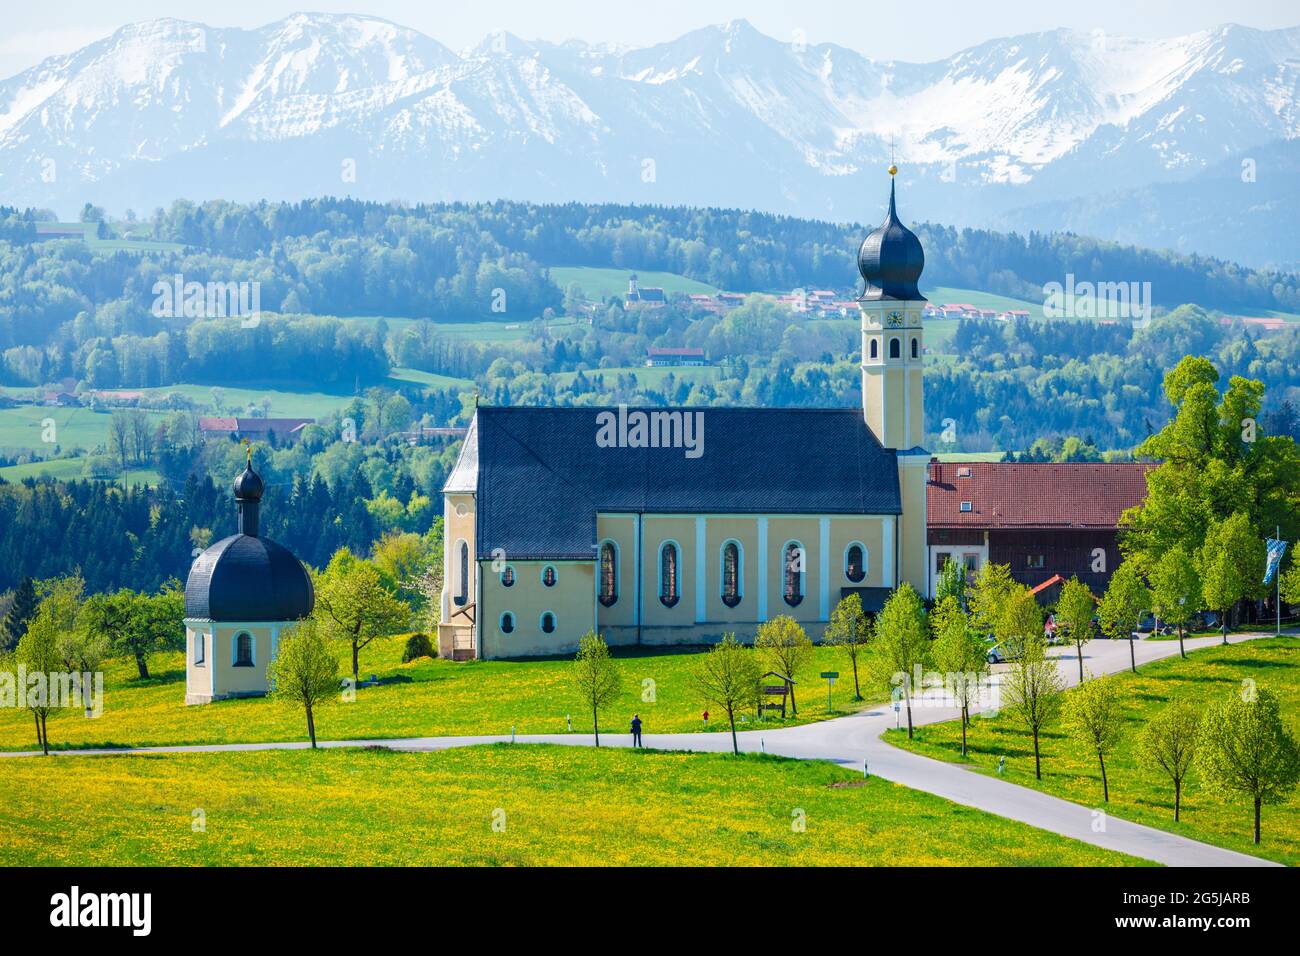 Church of Wilparting, Irschenberg, Upper Bavaria, Germany Stock Photo